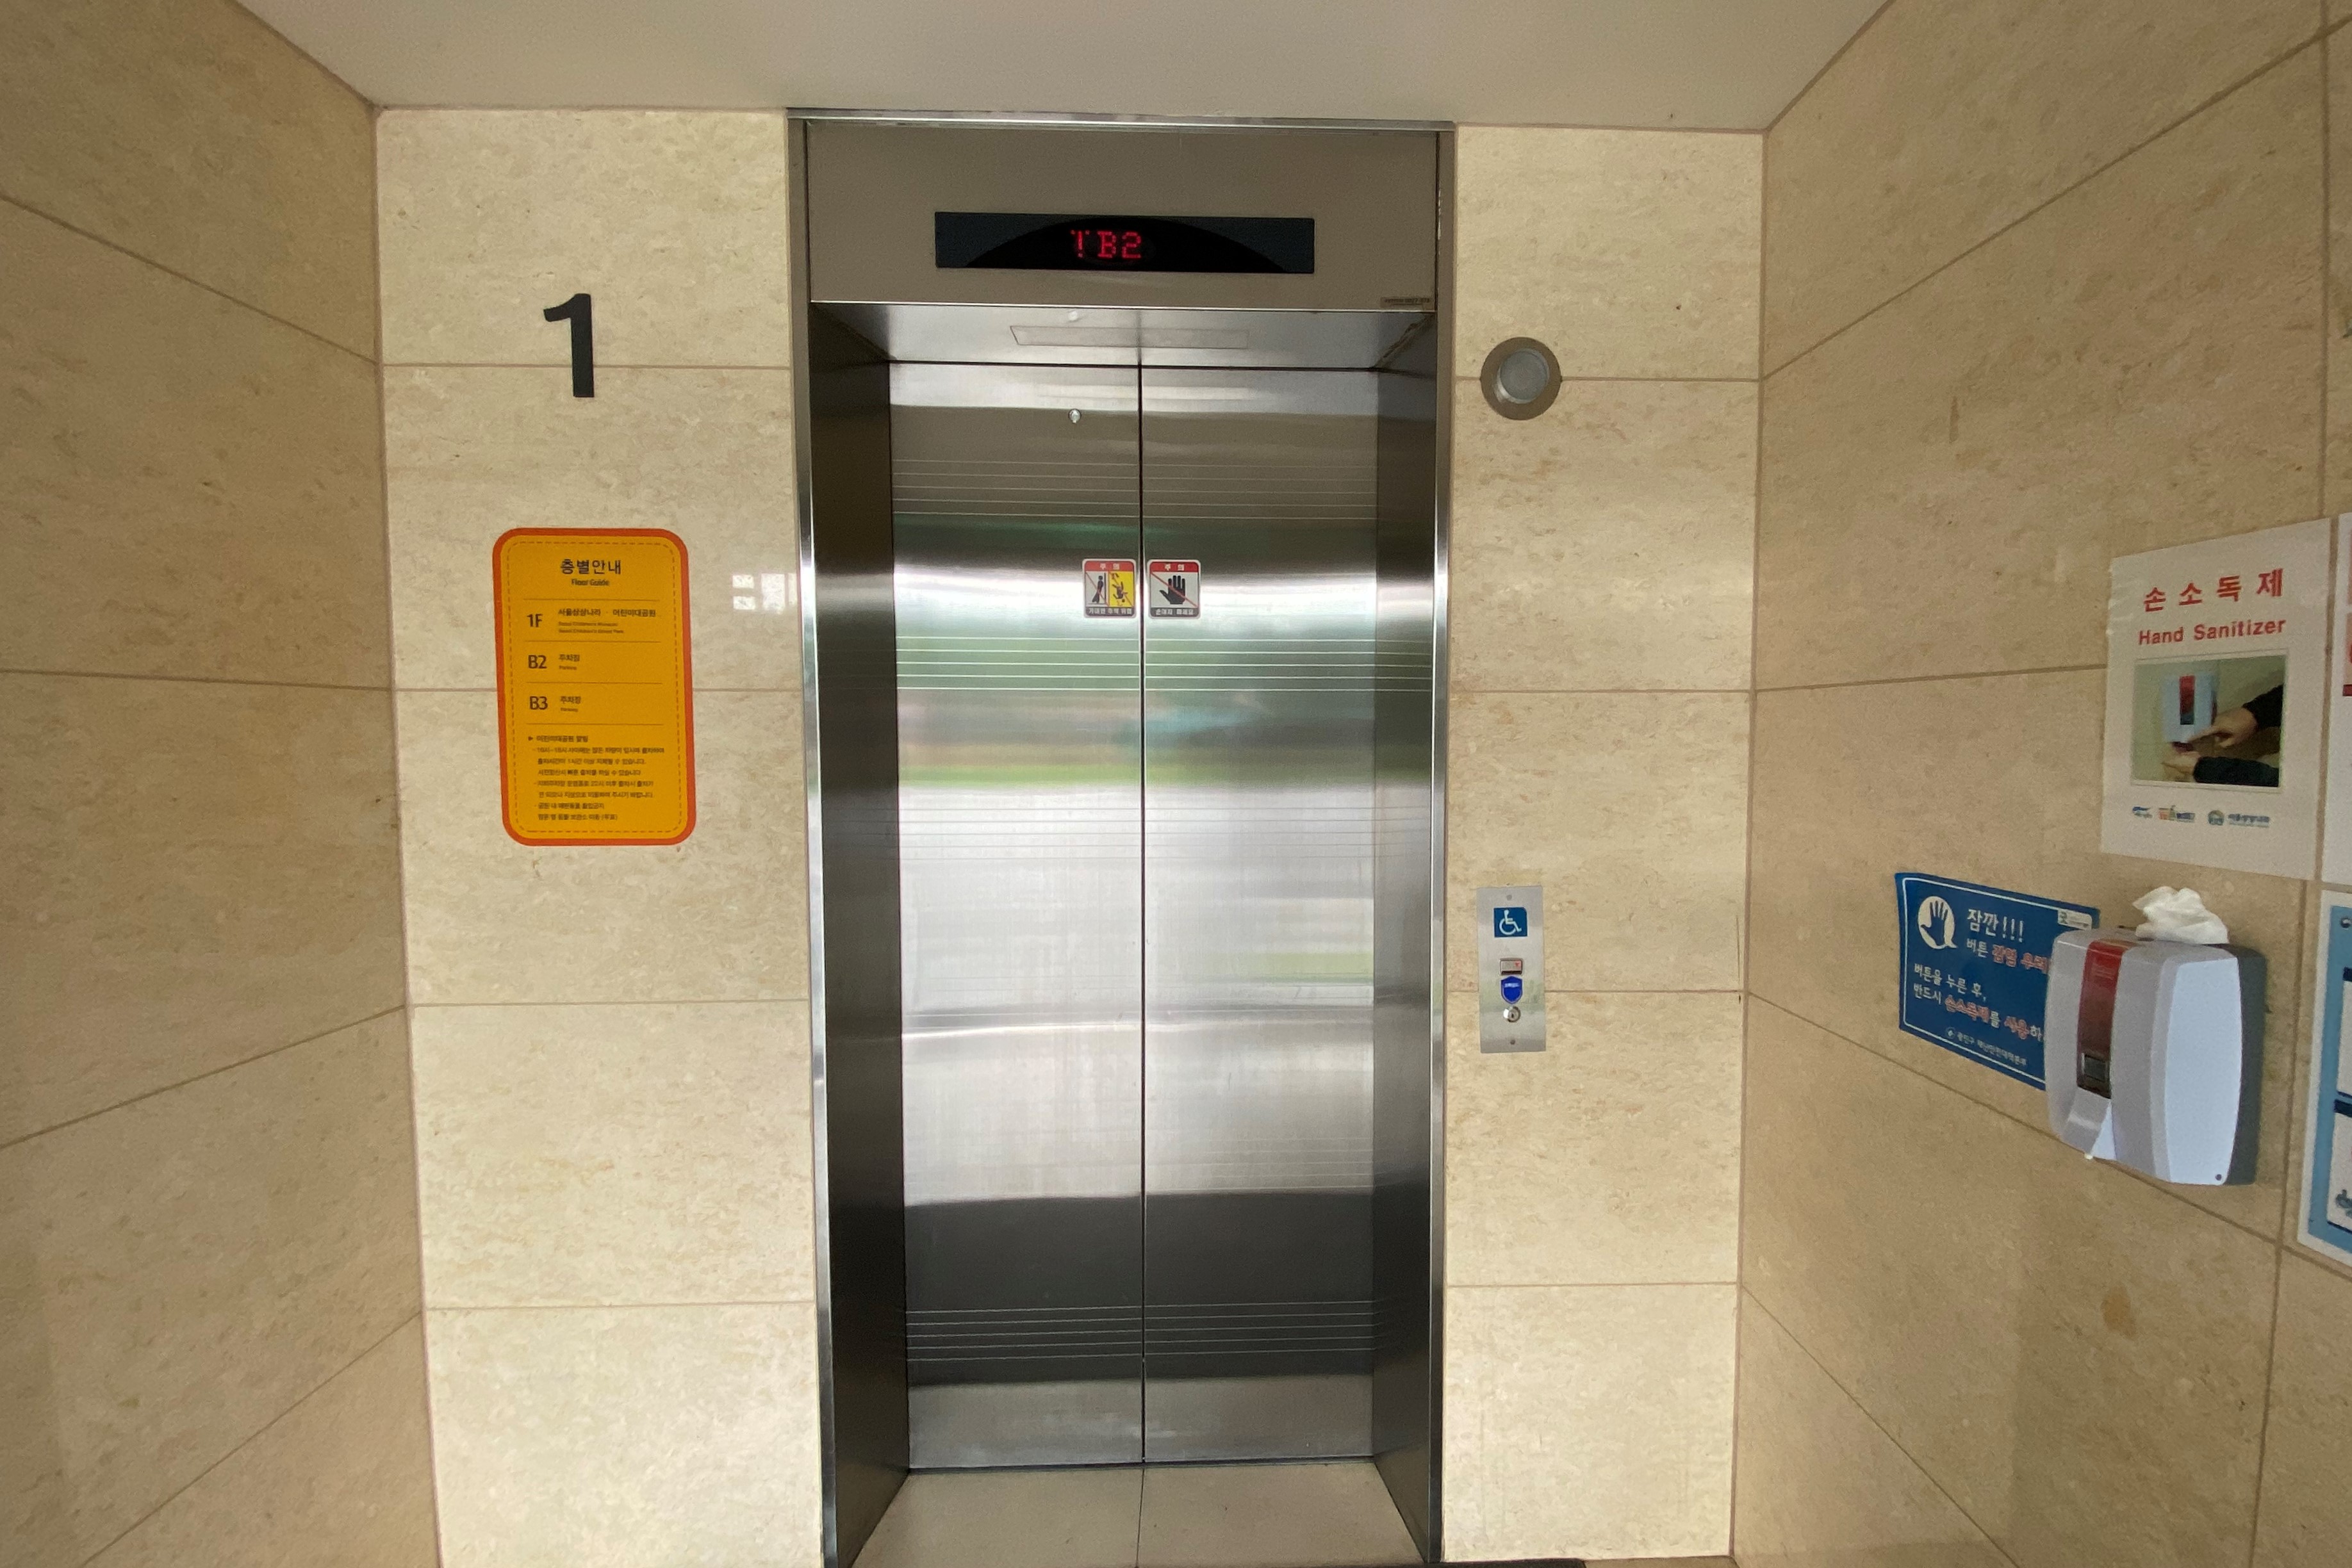 Elevators 0 : Exterior view of elevator at Seoul Children's Grand Park